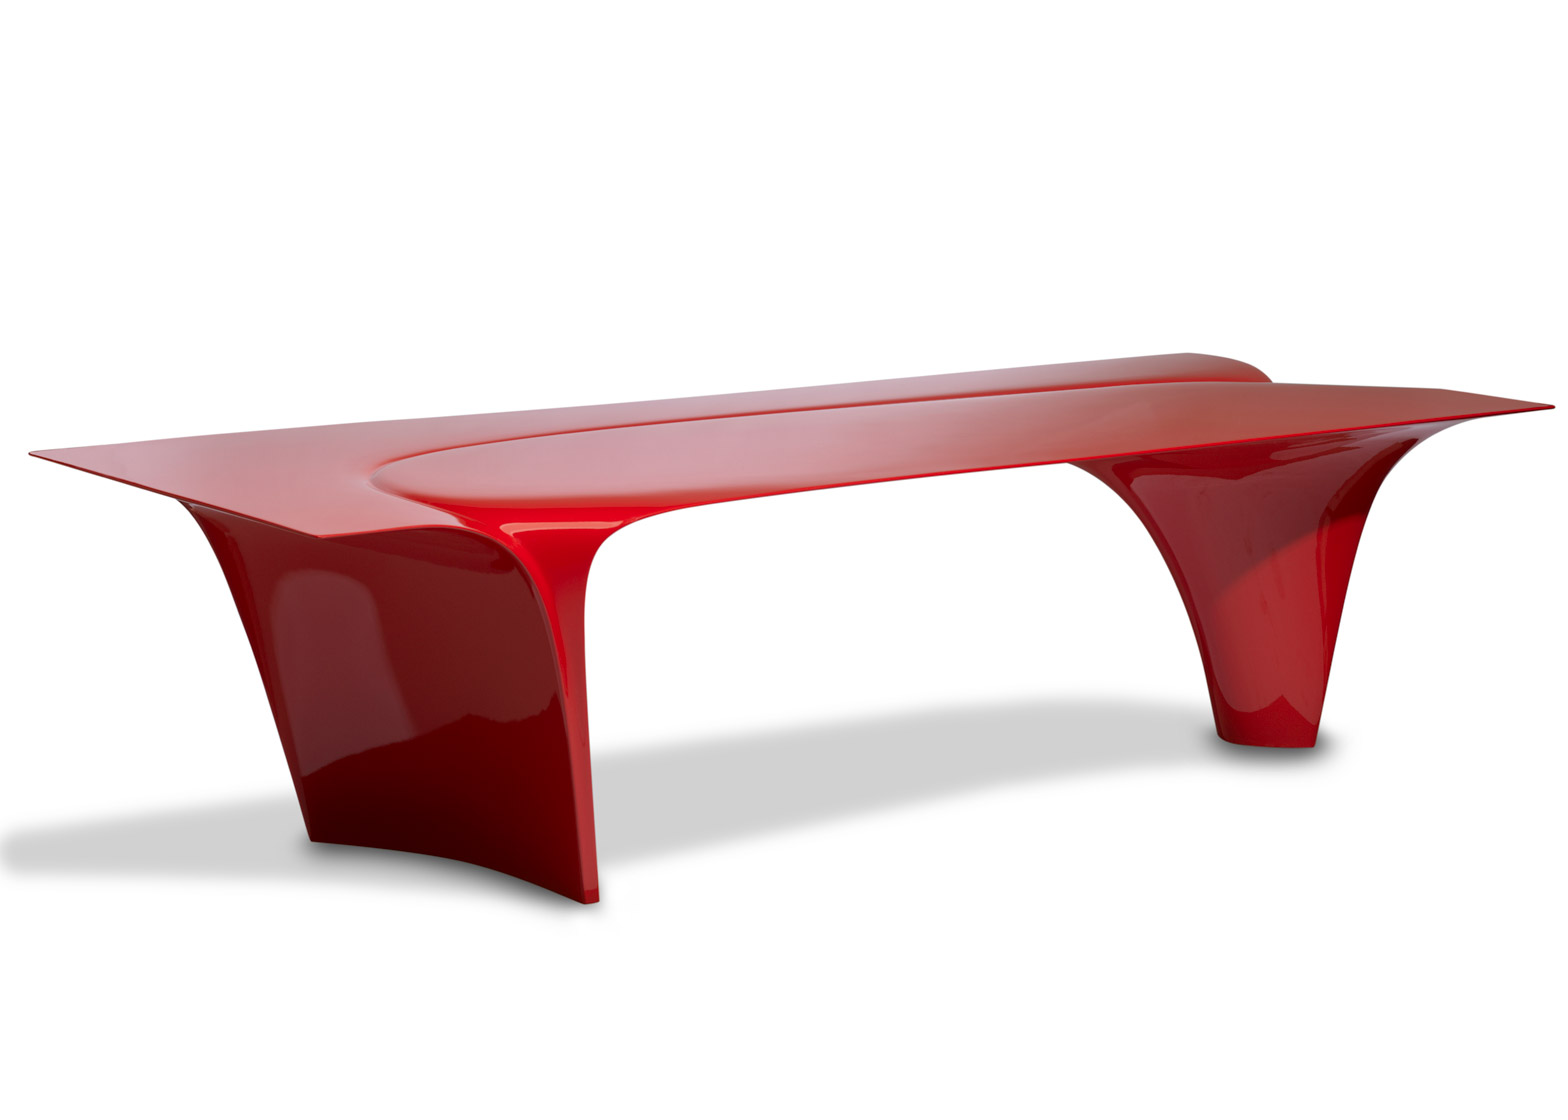 Theoretical Buzz wife Zaha Hadid's Mew table is her last piece of furniture design for Sawaya &  Moroni